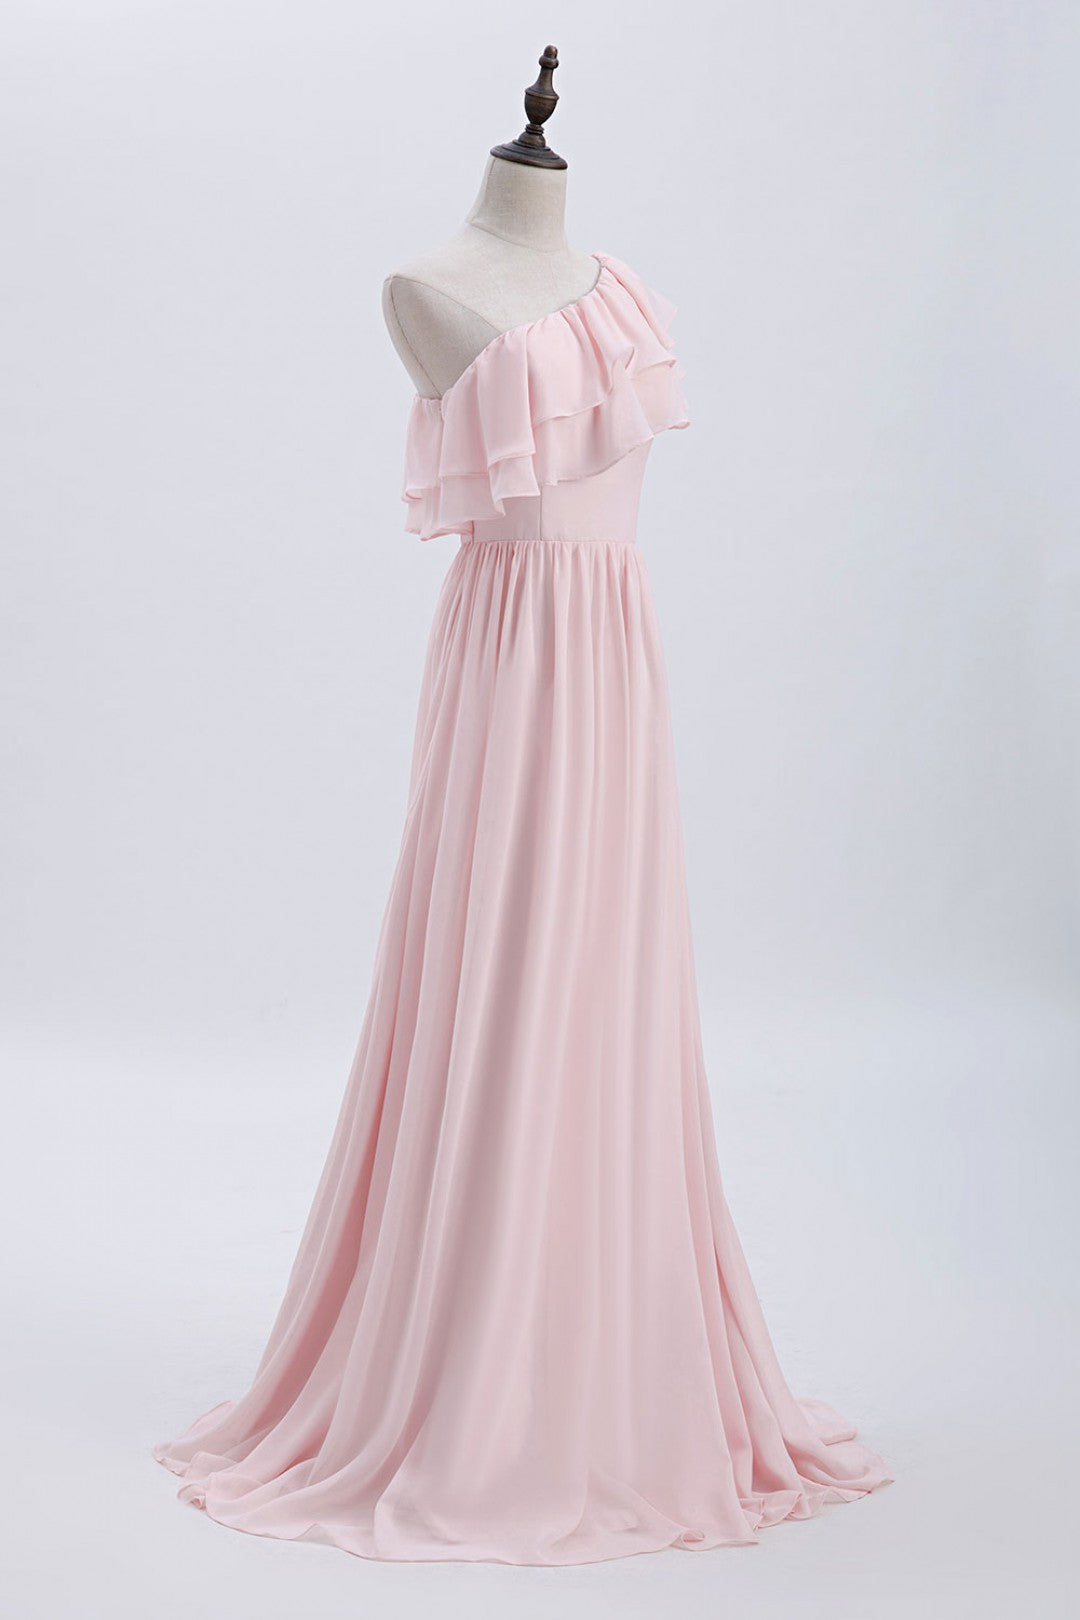 Ruffles Pink One Shoulder Chiffon A-line Long Bridesmaid Dress